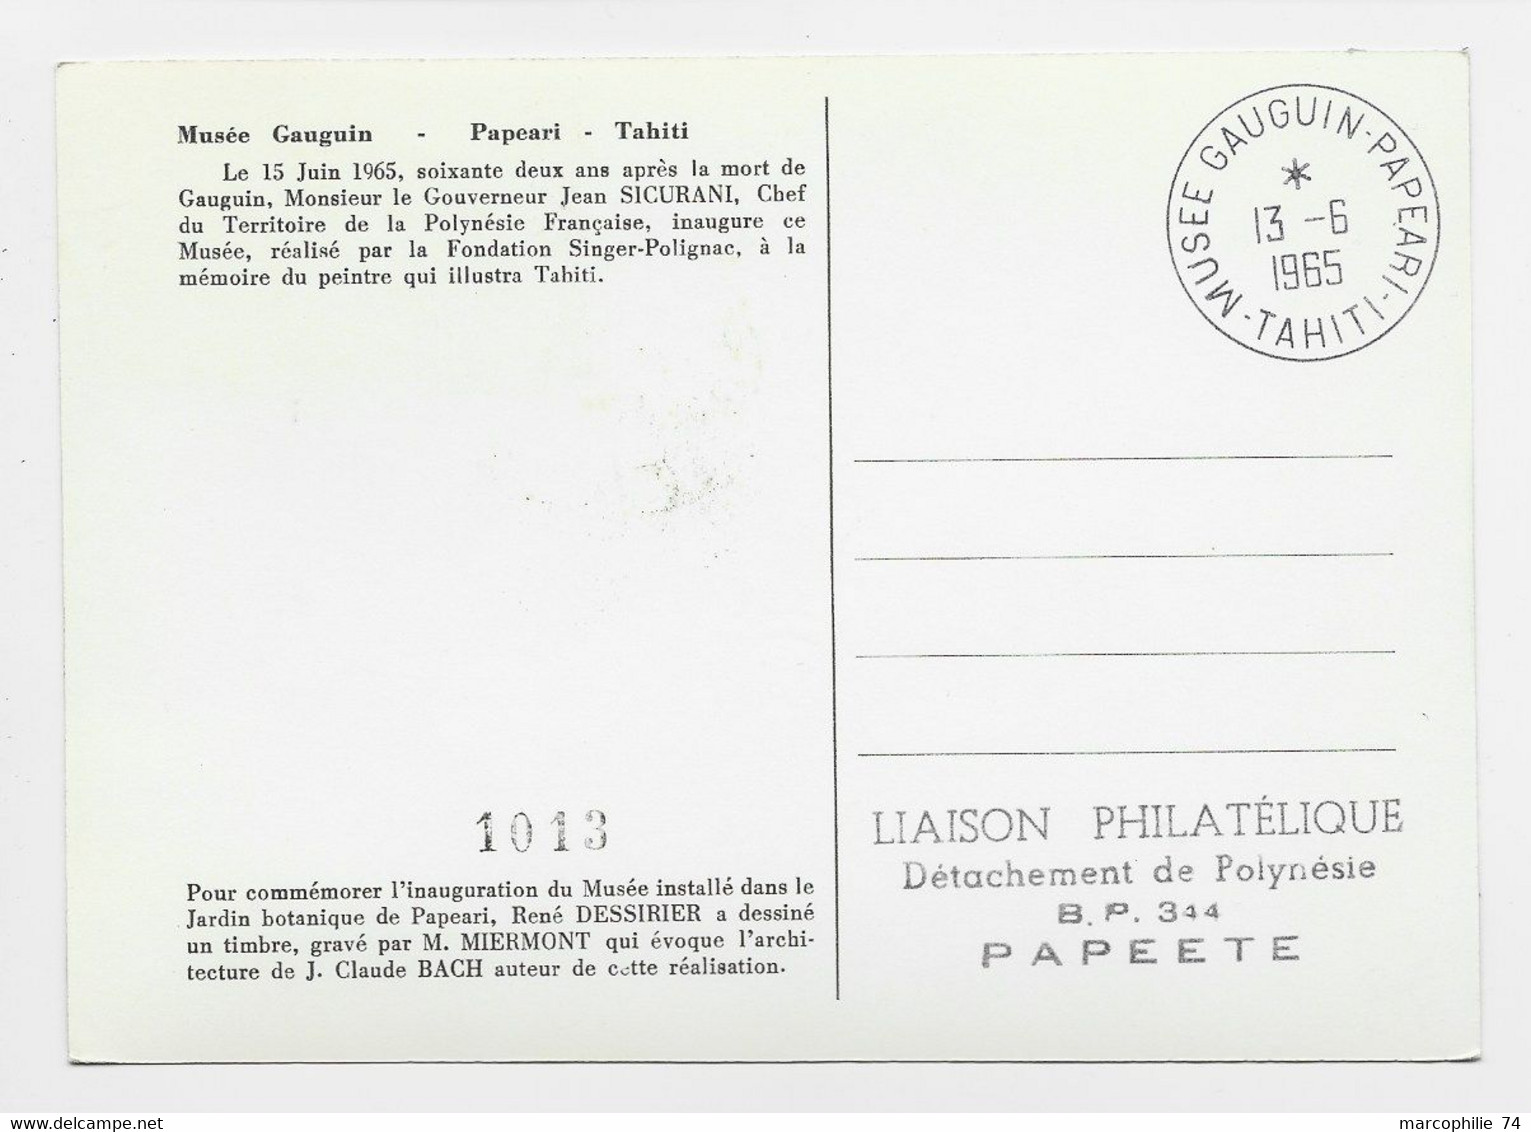 POLYNESIE FRANCAISE 25FR CARTE MAXIMUM PREMIER JOUR MUSEE GAUGUIN 13 JUIN 1965 PAPEARI + SIGNATURE RENE DESSIRIER - Cartes-maximum